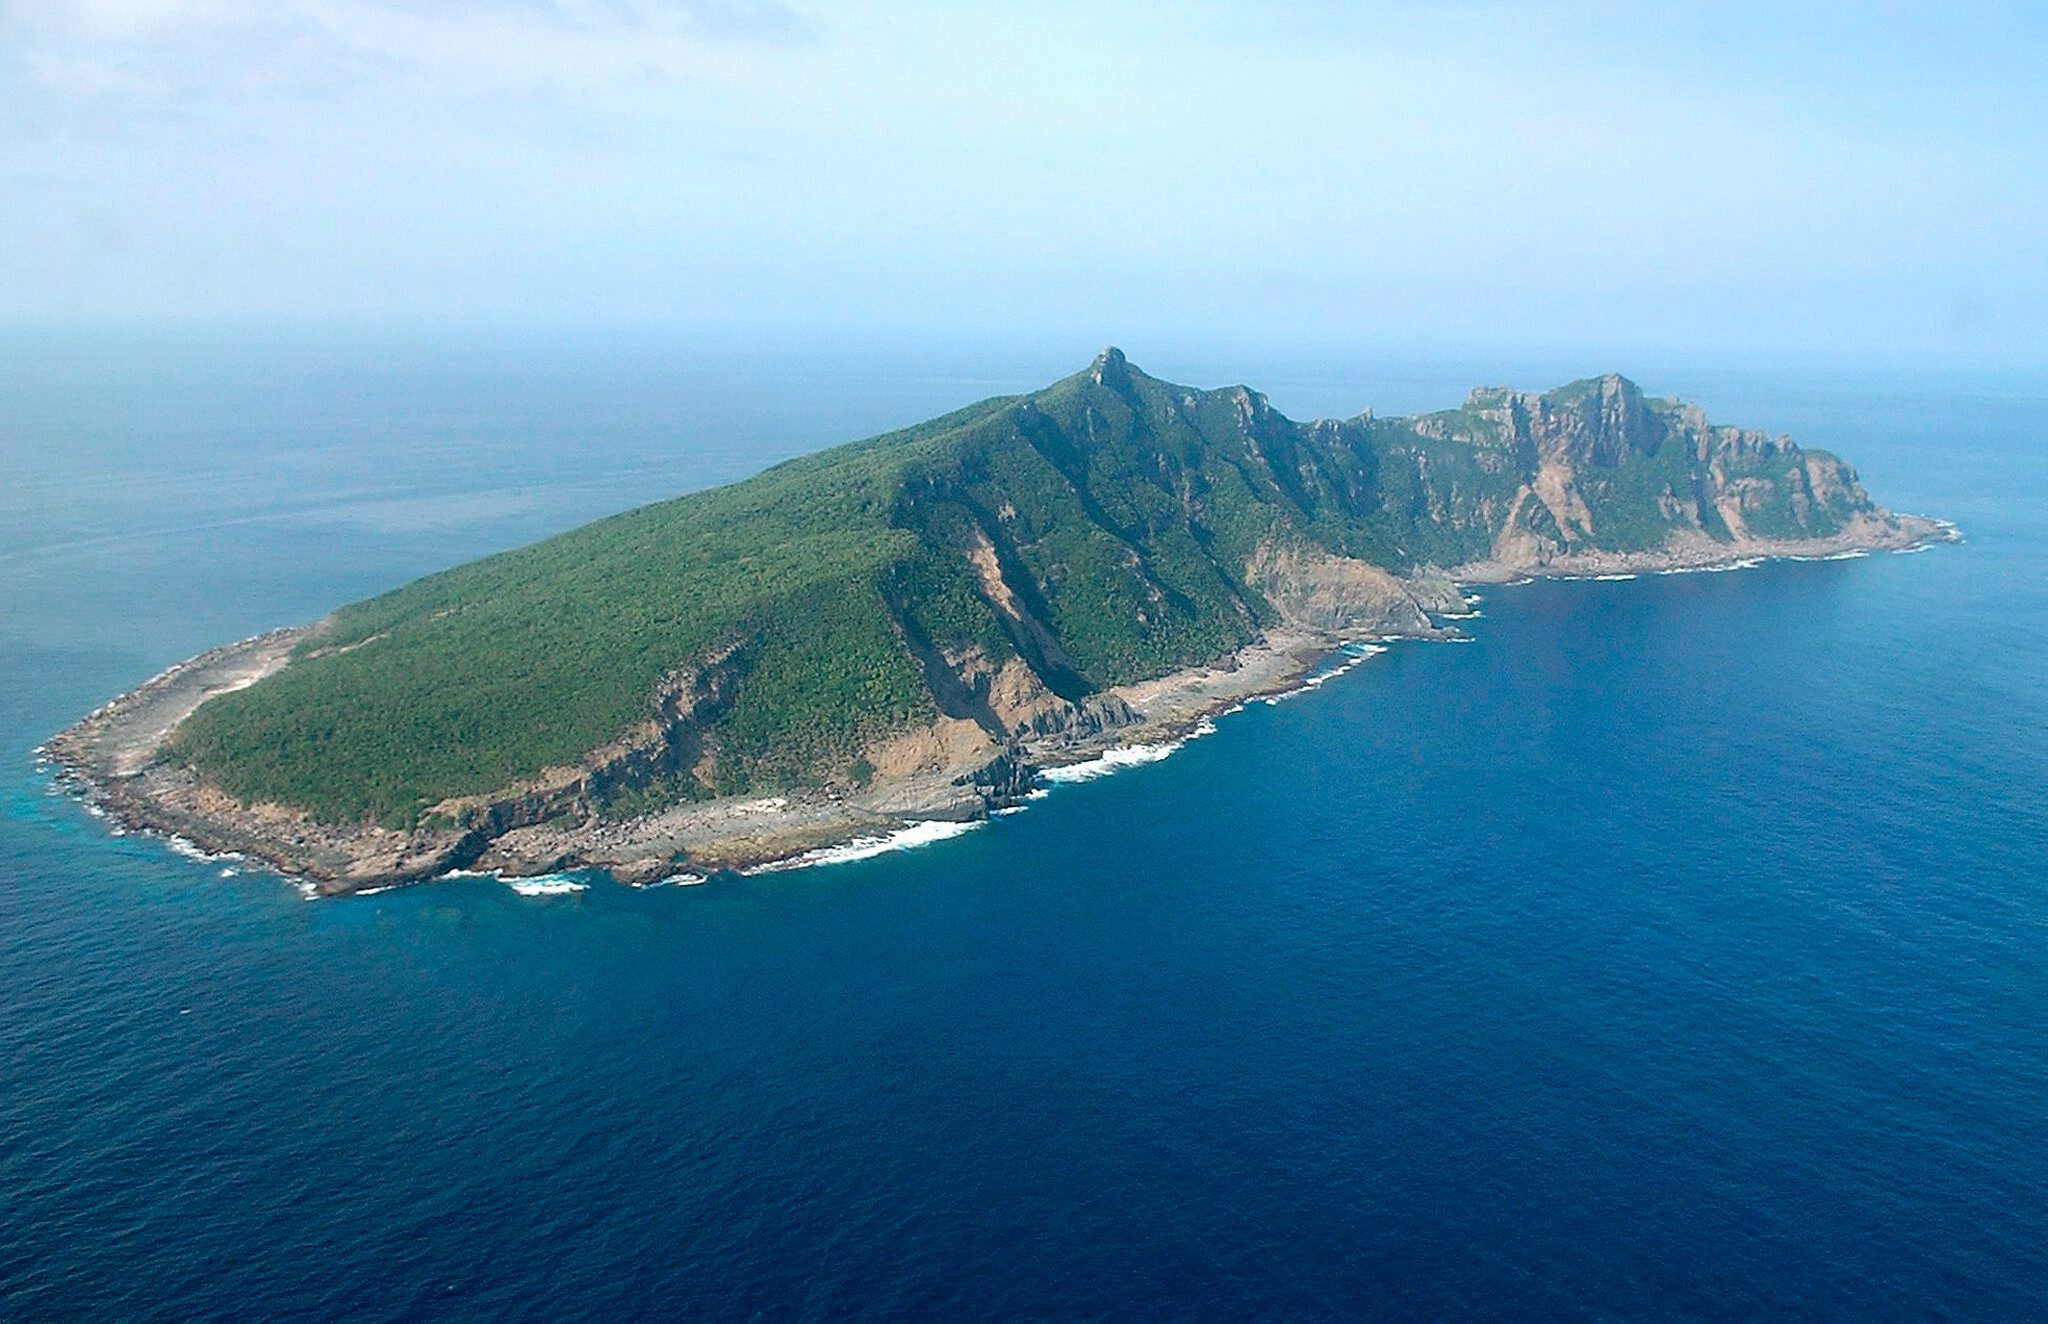 Blick auf eine der Senkaku-Inseln | picture alliance / Hiroya Shimoji/epa/dpa